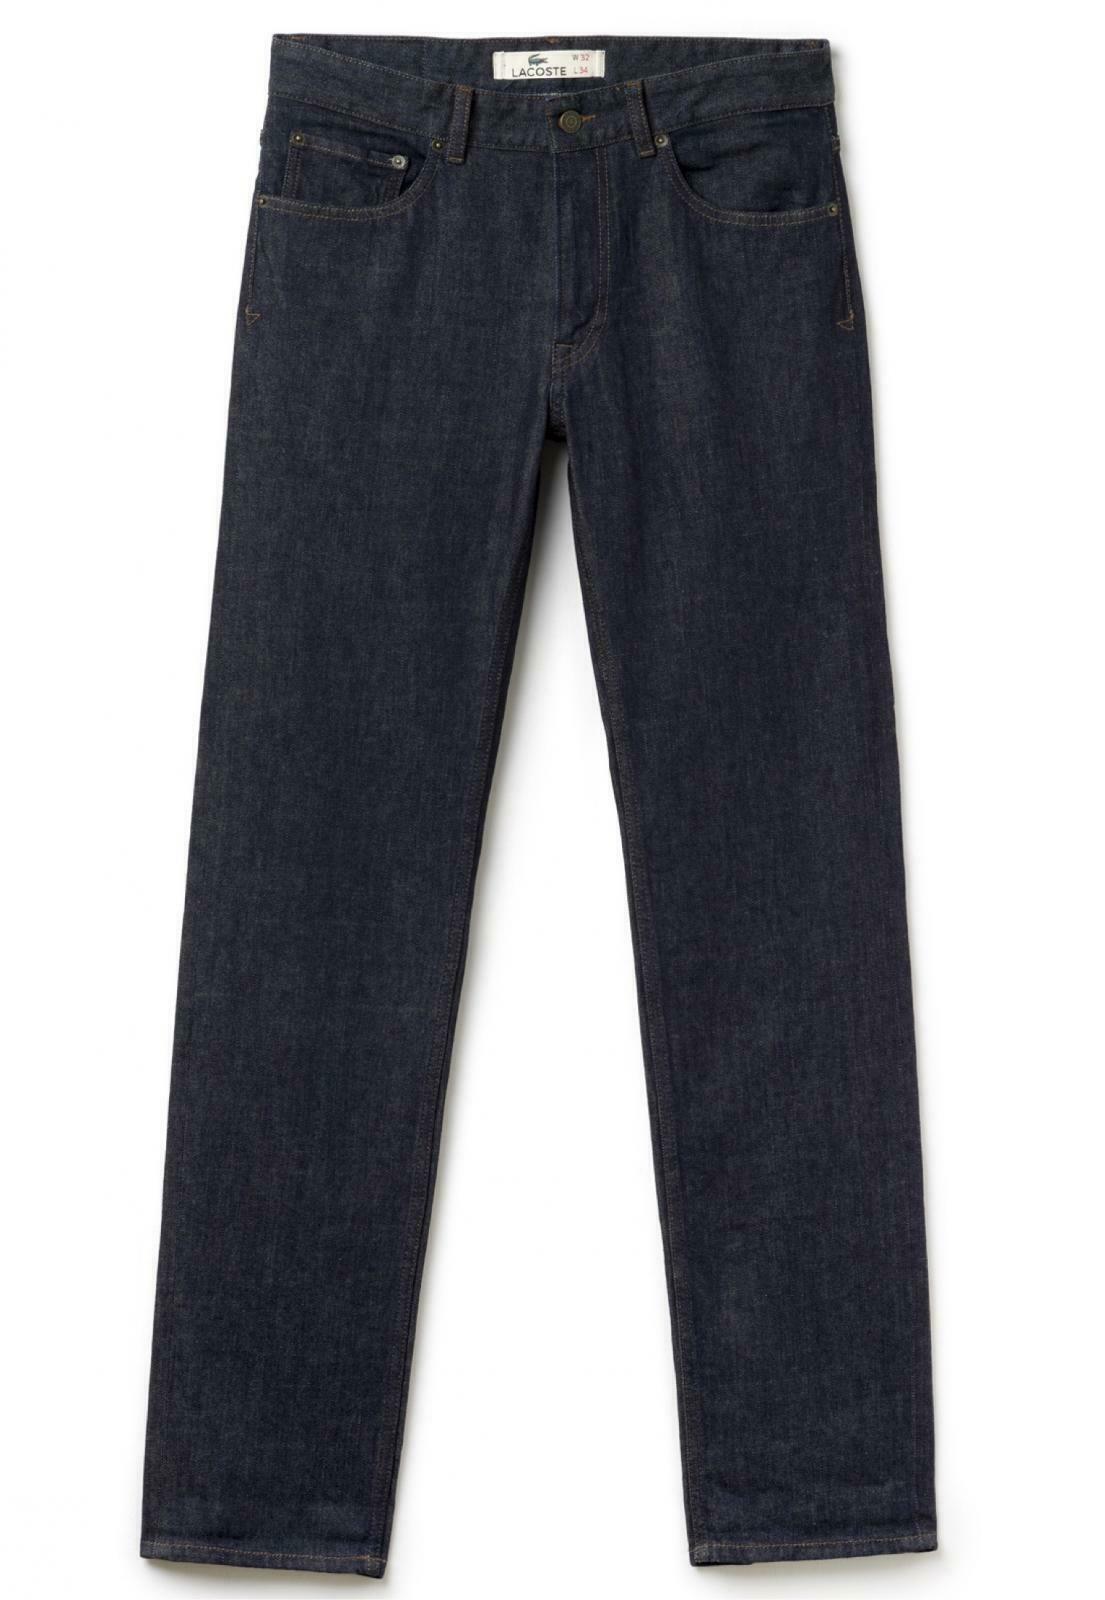 Lacoste Men's Regular Fit Jeans Blue 